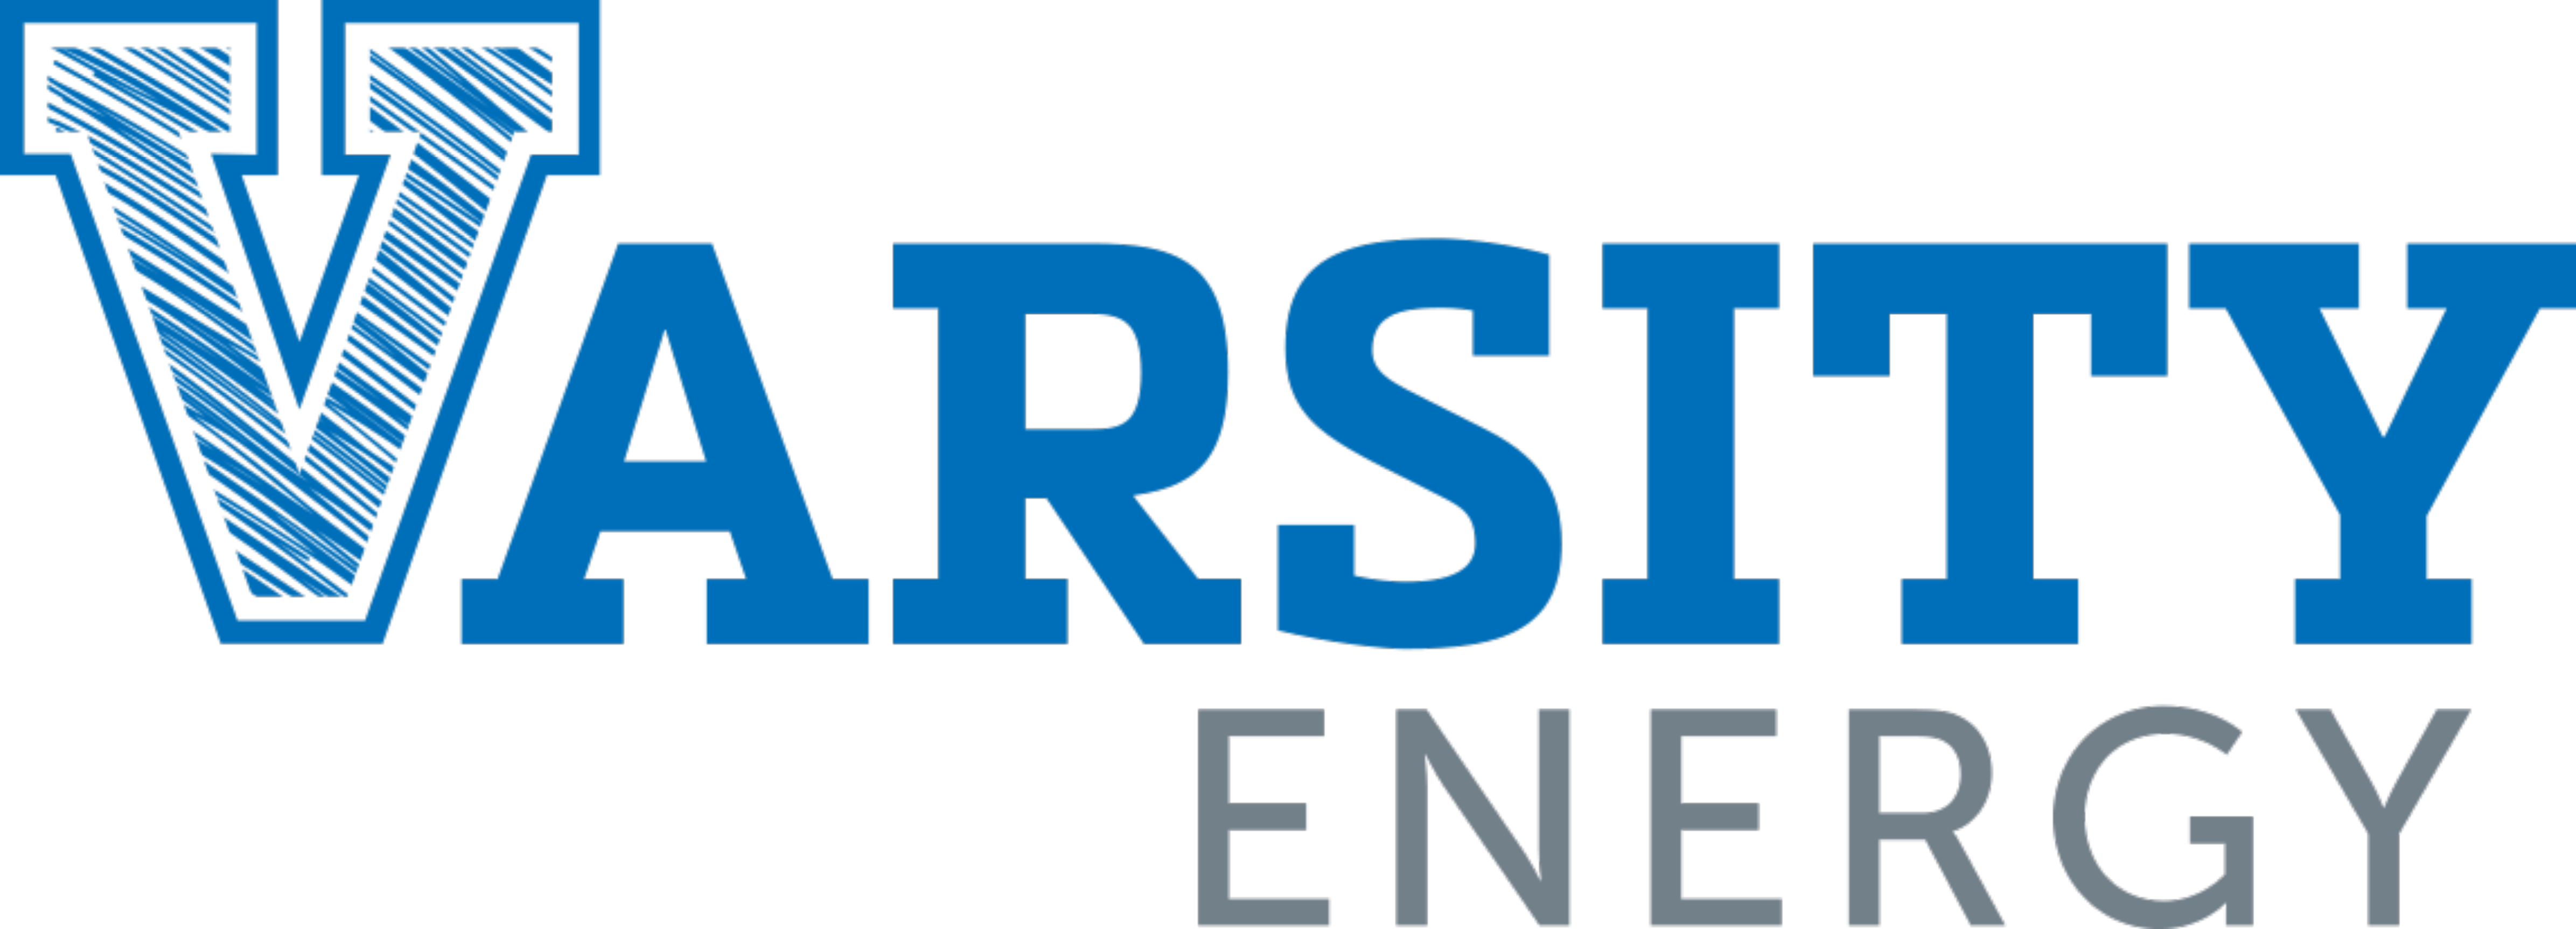 varsity-energy-color-logo